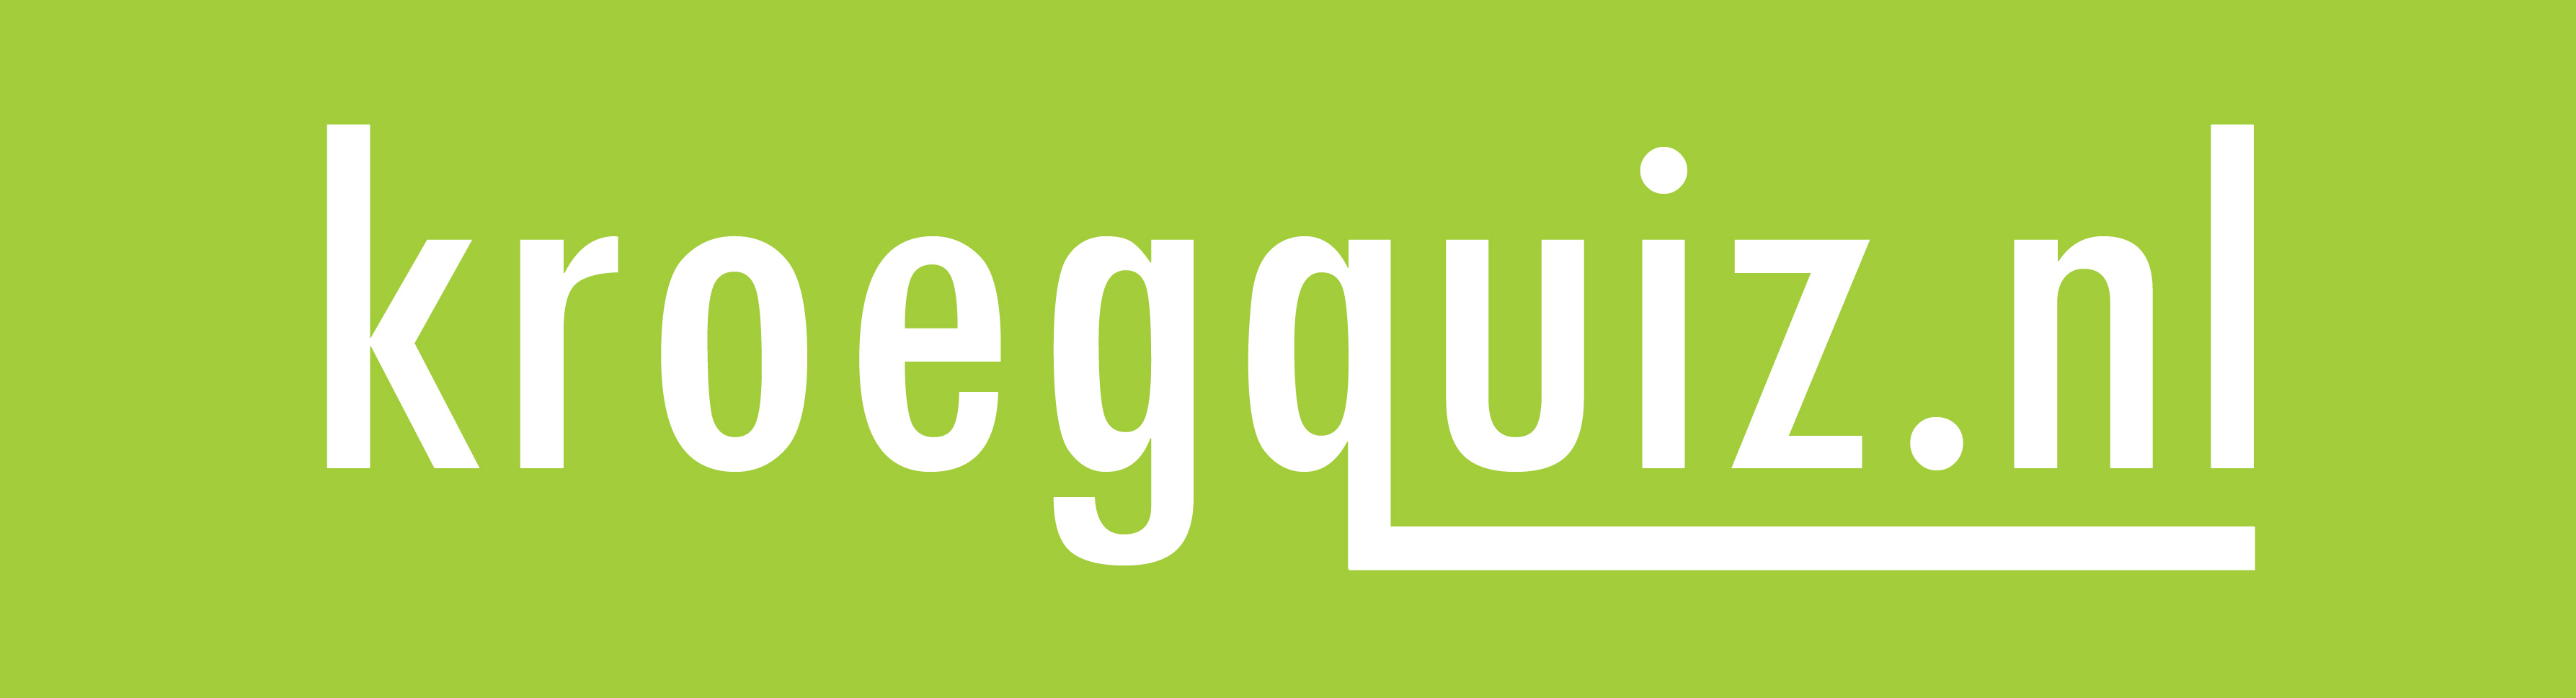 KroegQuiz logo